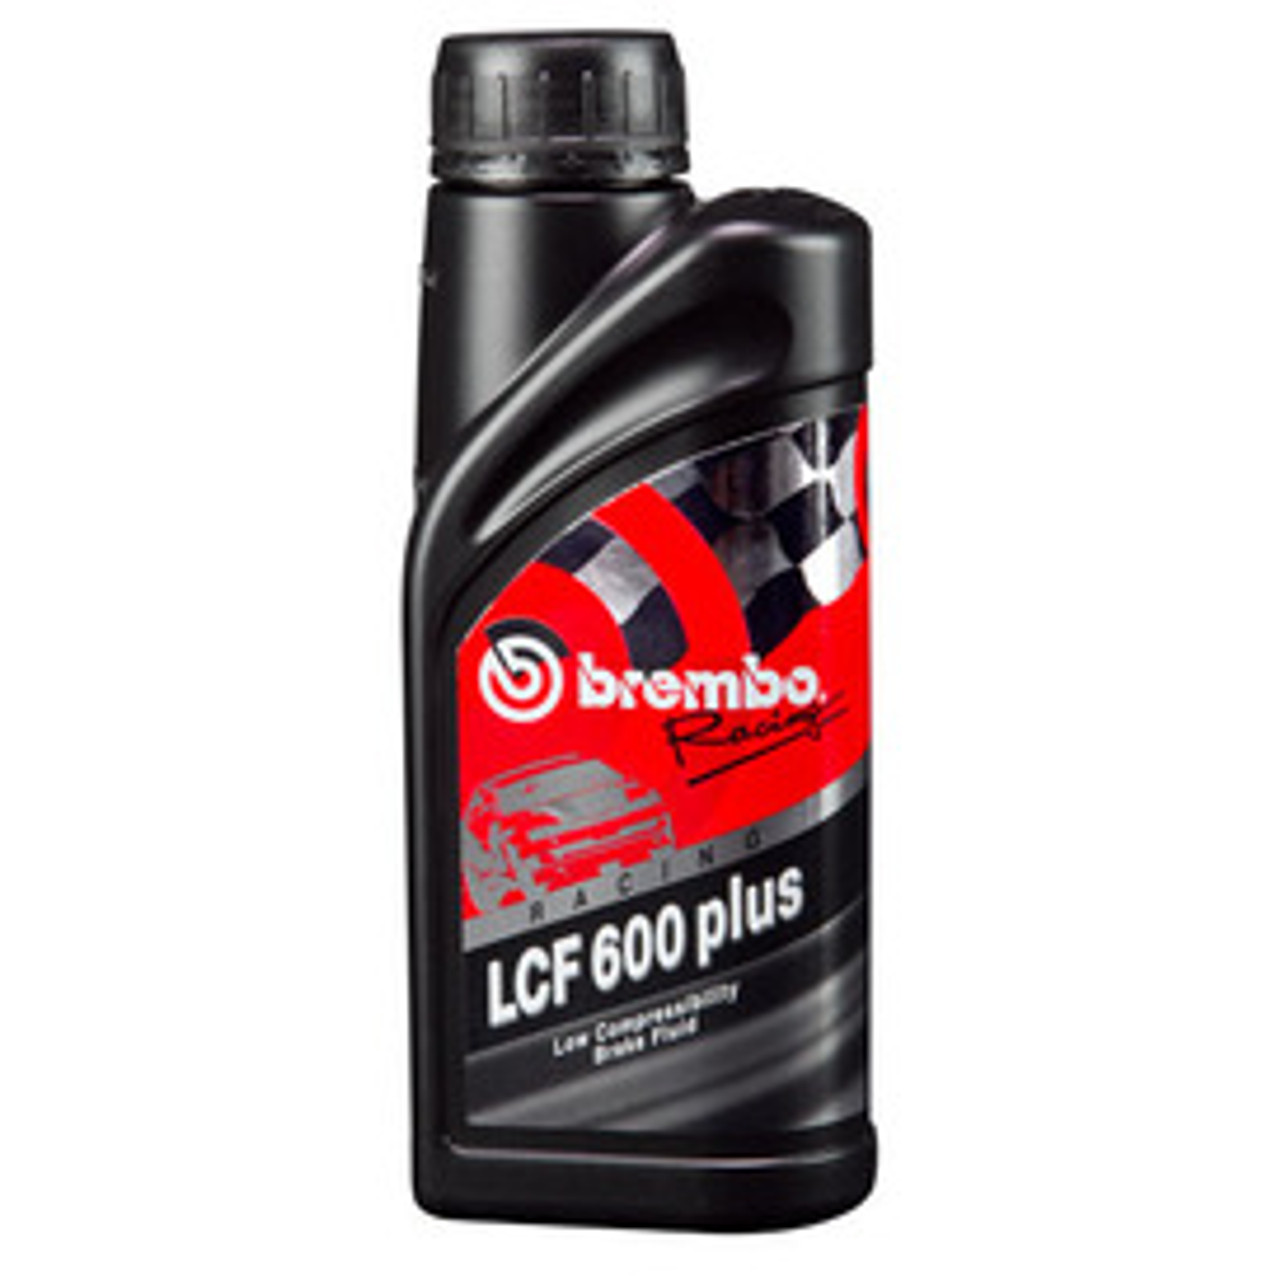 Brembo LCF 600 Plus